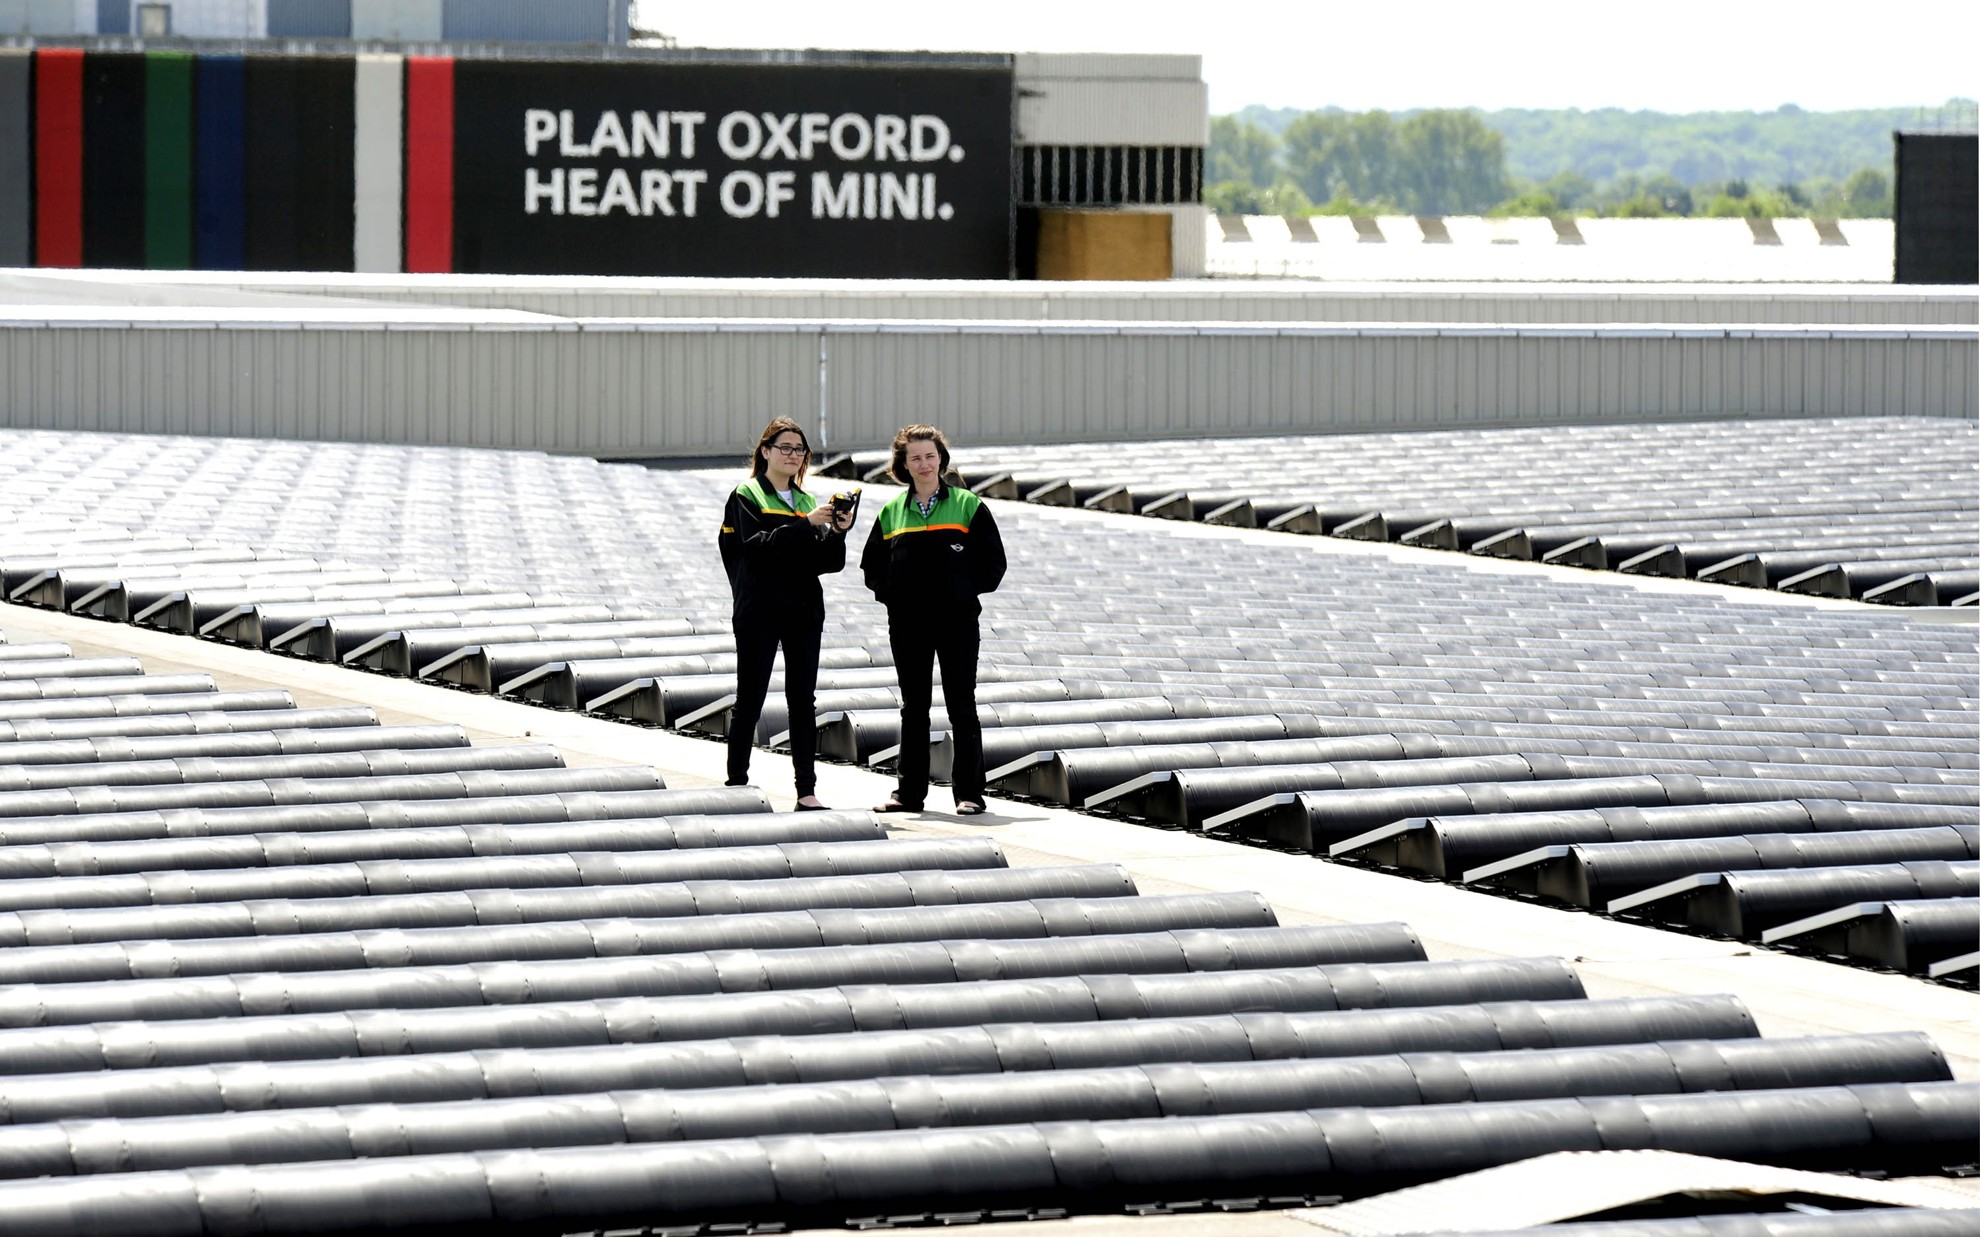 Solar farm helps drive MINI Plant